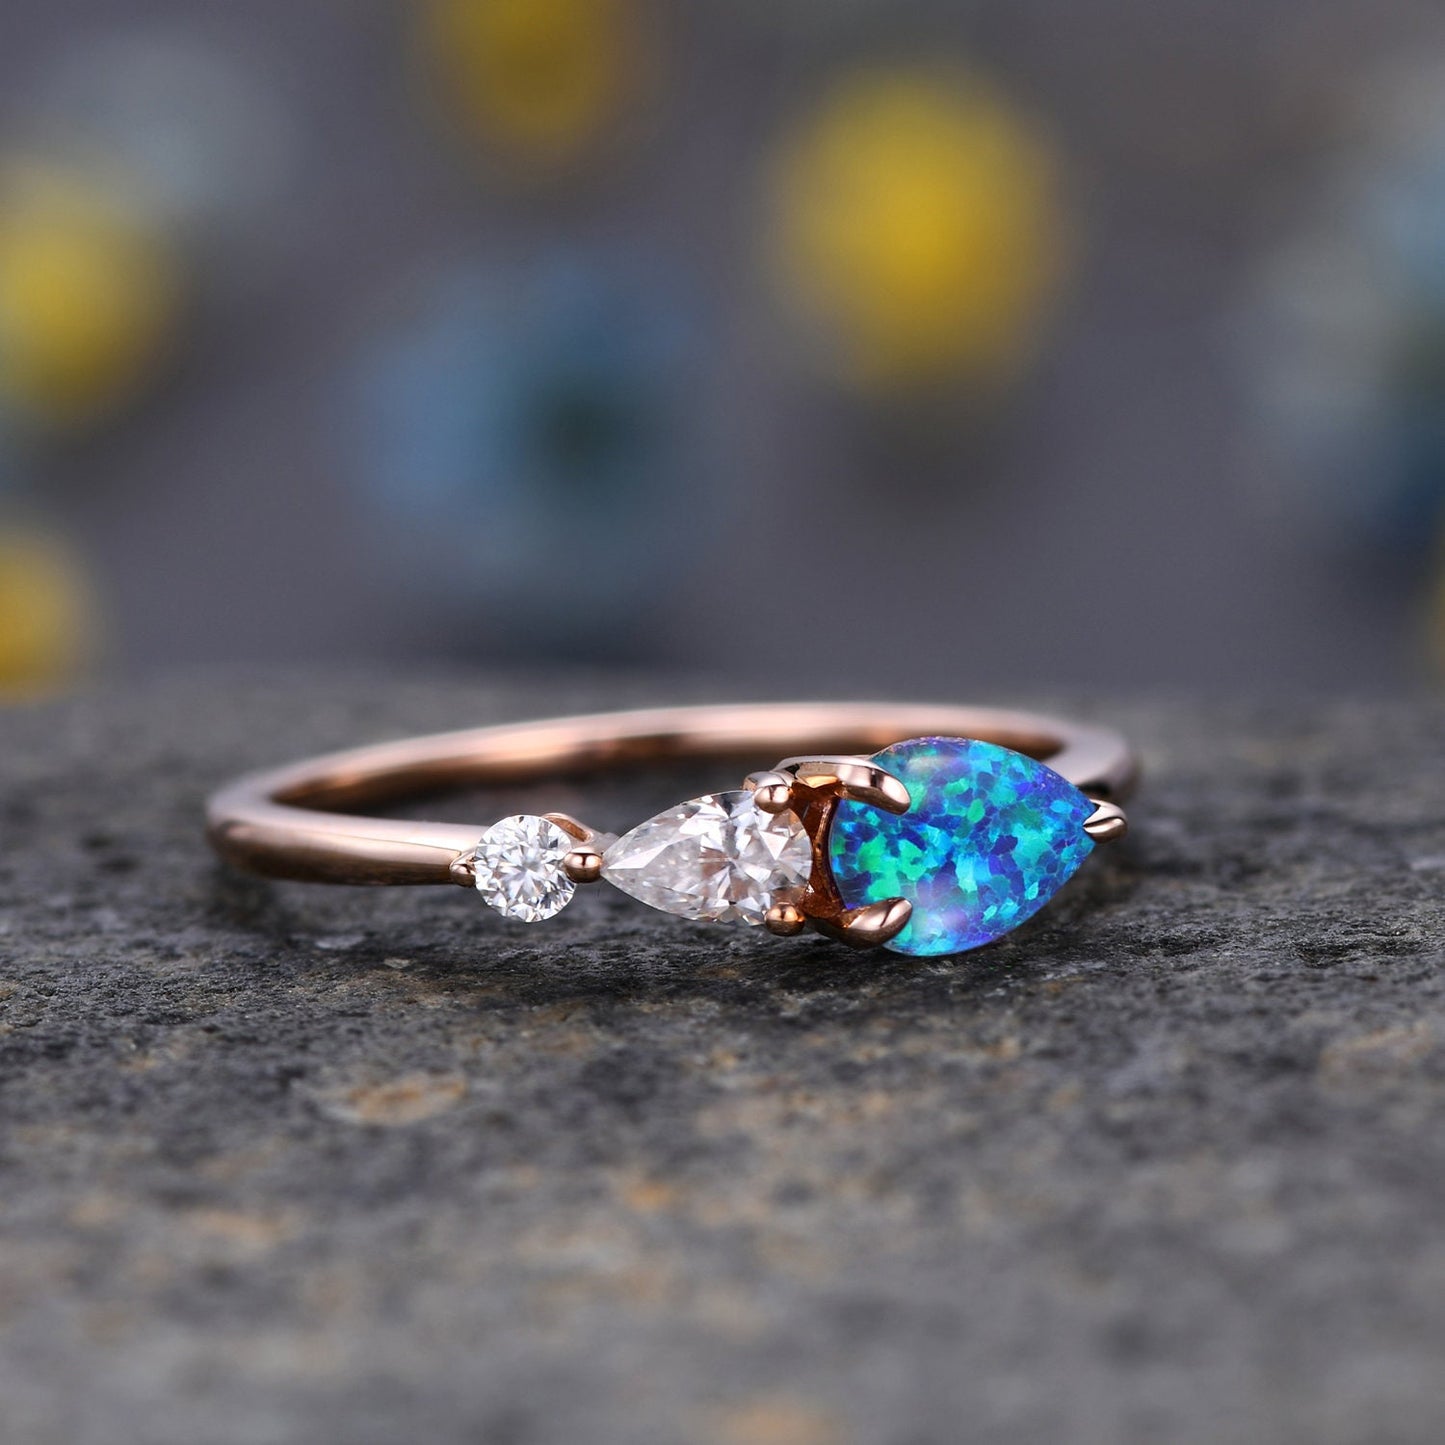 Vintage Black Opal Ring Engagement Ring,Pear Cut Gems,Art Deco Moissanite Wedding Band,3 Stone Unique Women Bridal Promise Ring,Rose gold